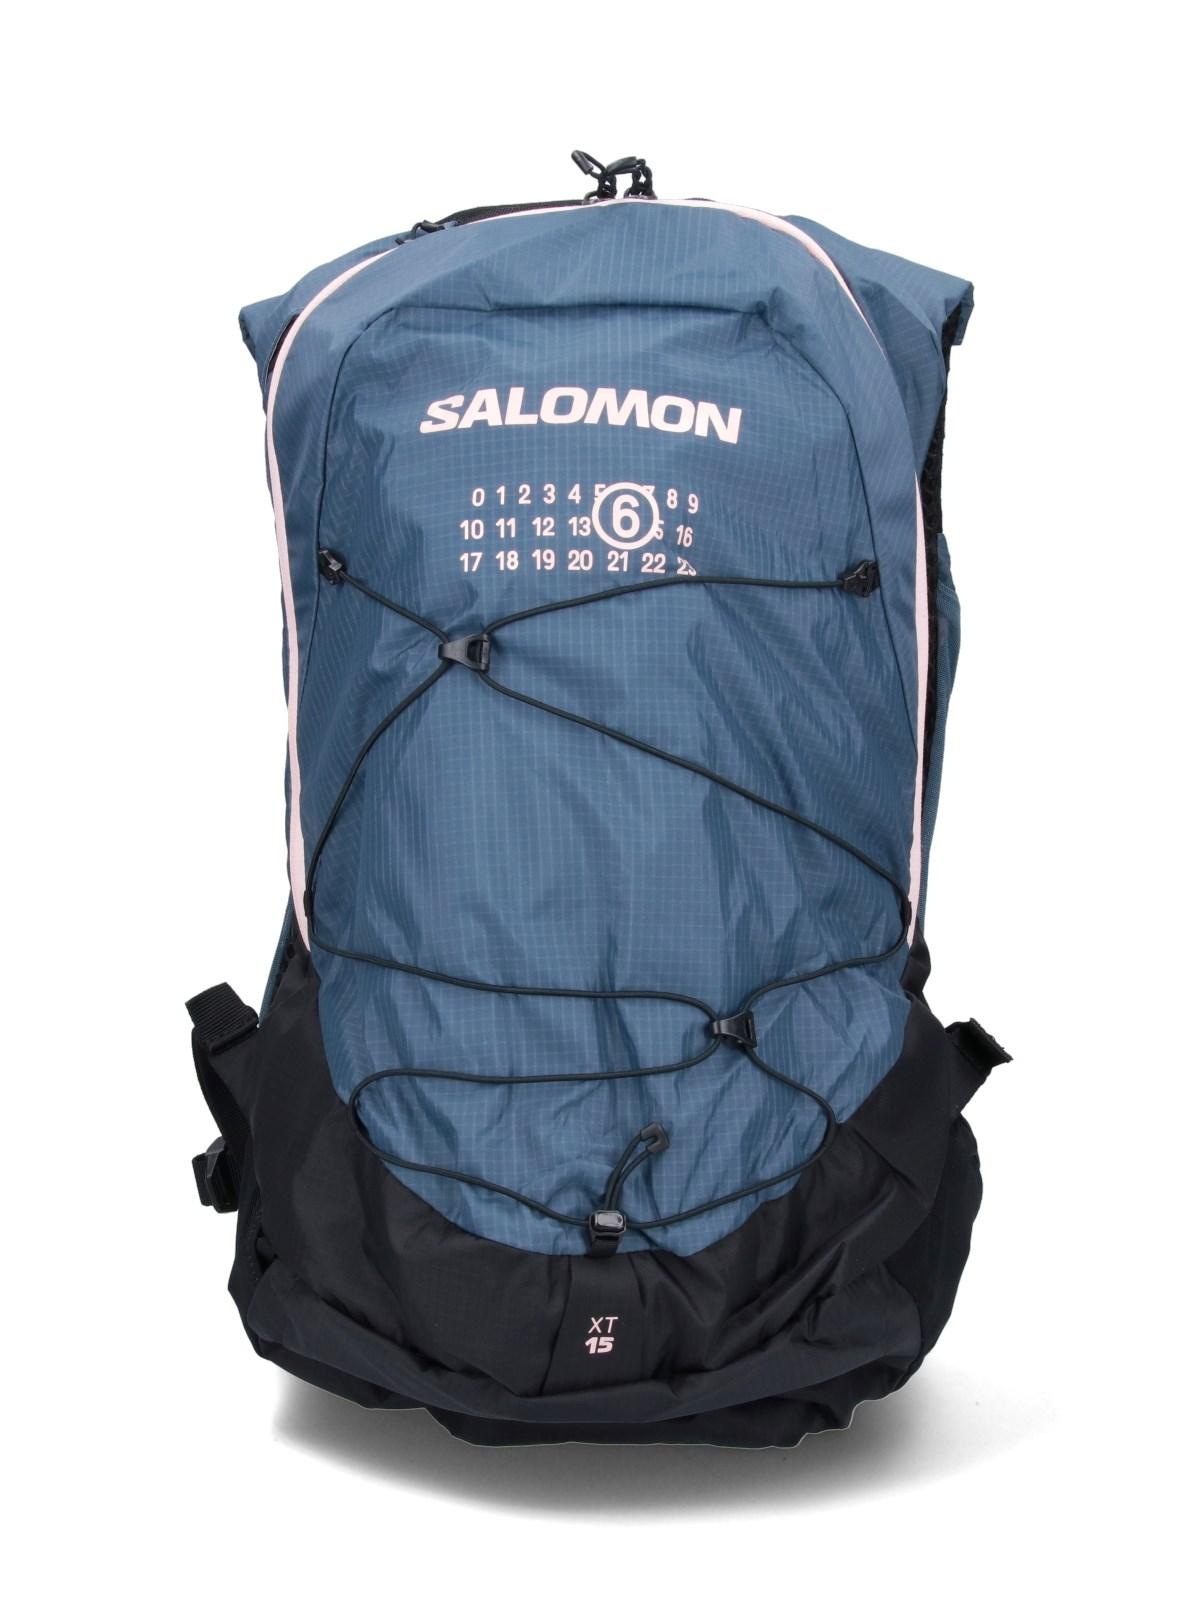 MM6 by Maison Martin Margiela X Salomon 'xt-15' Backpack in Blue